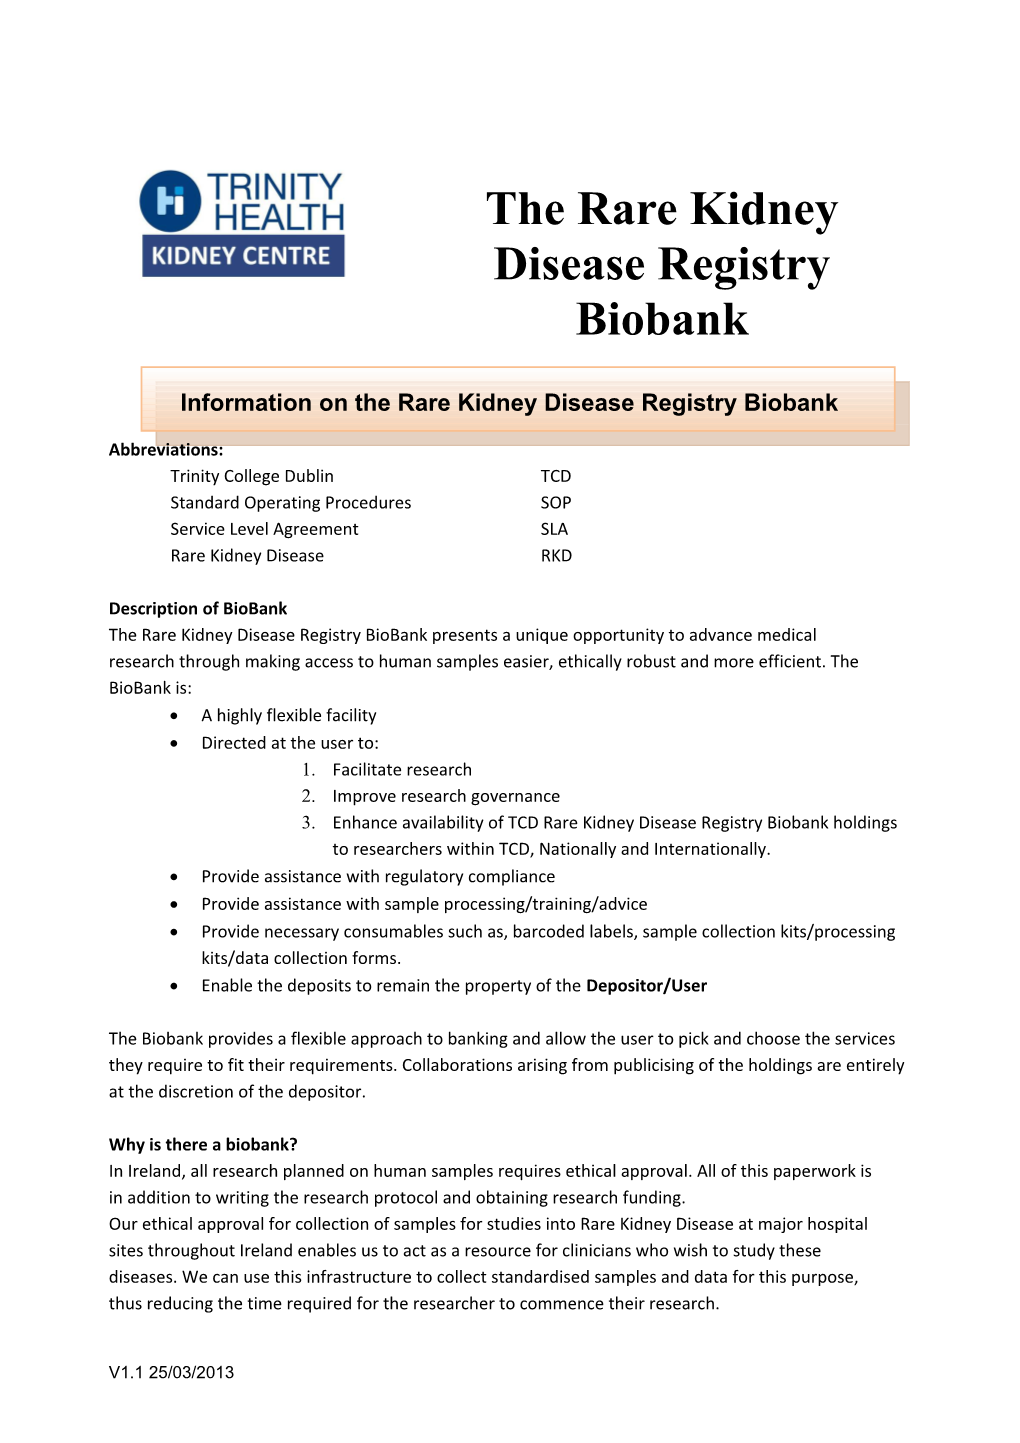 The Rare Kidney Disease Registry Biobank